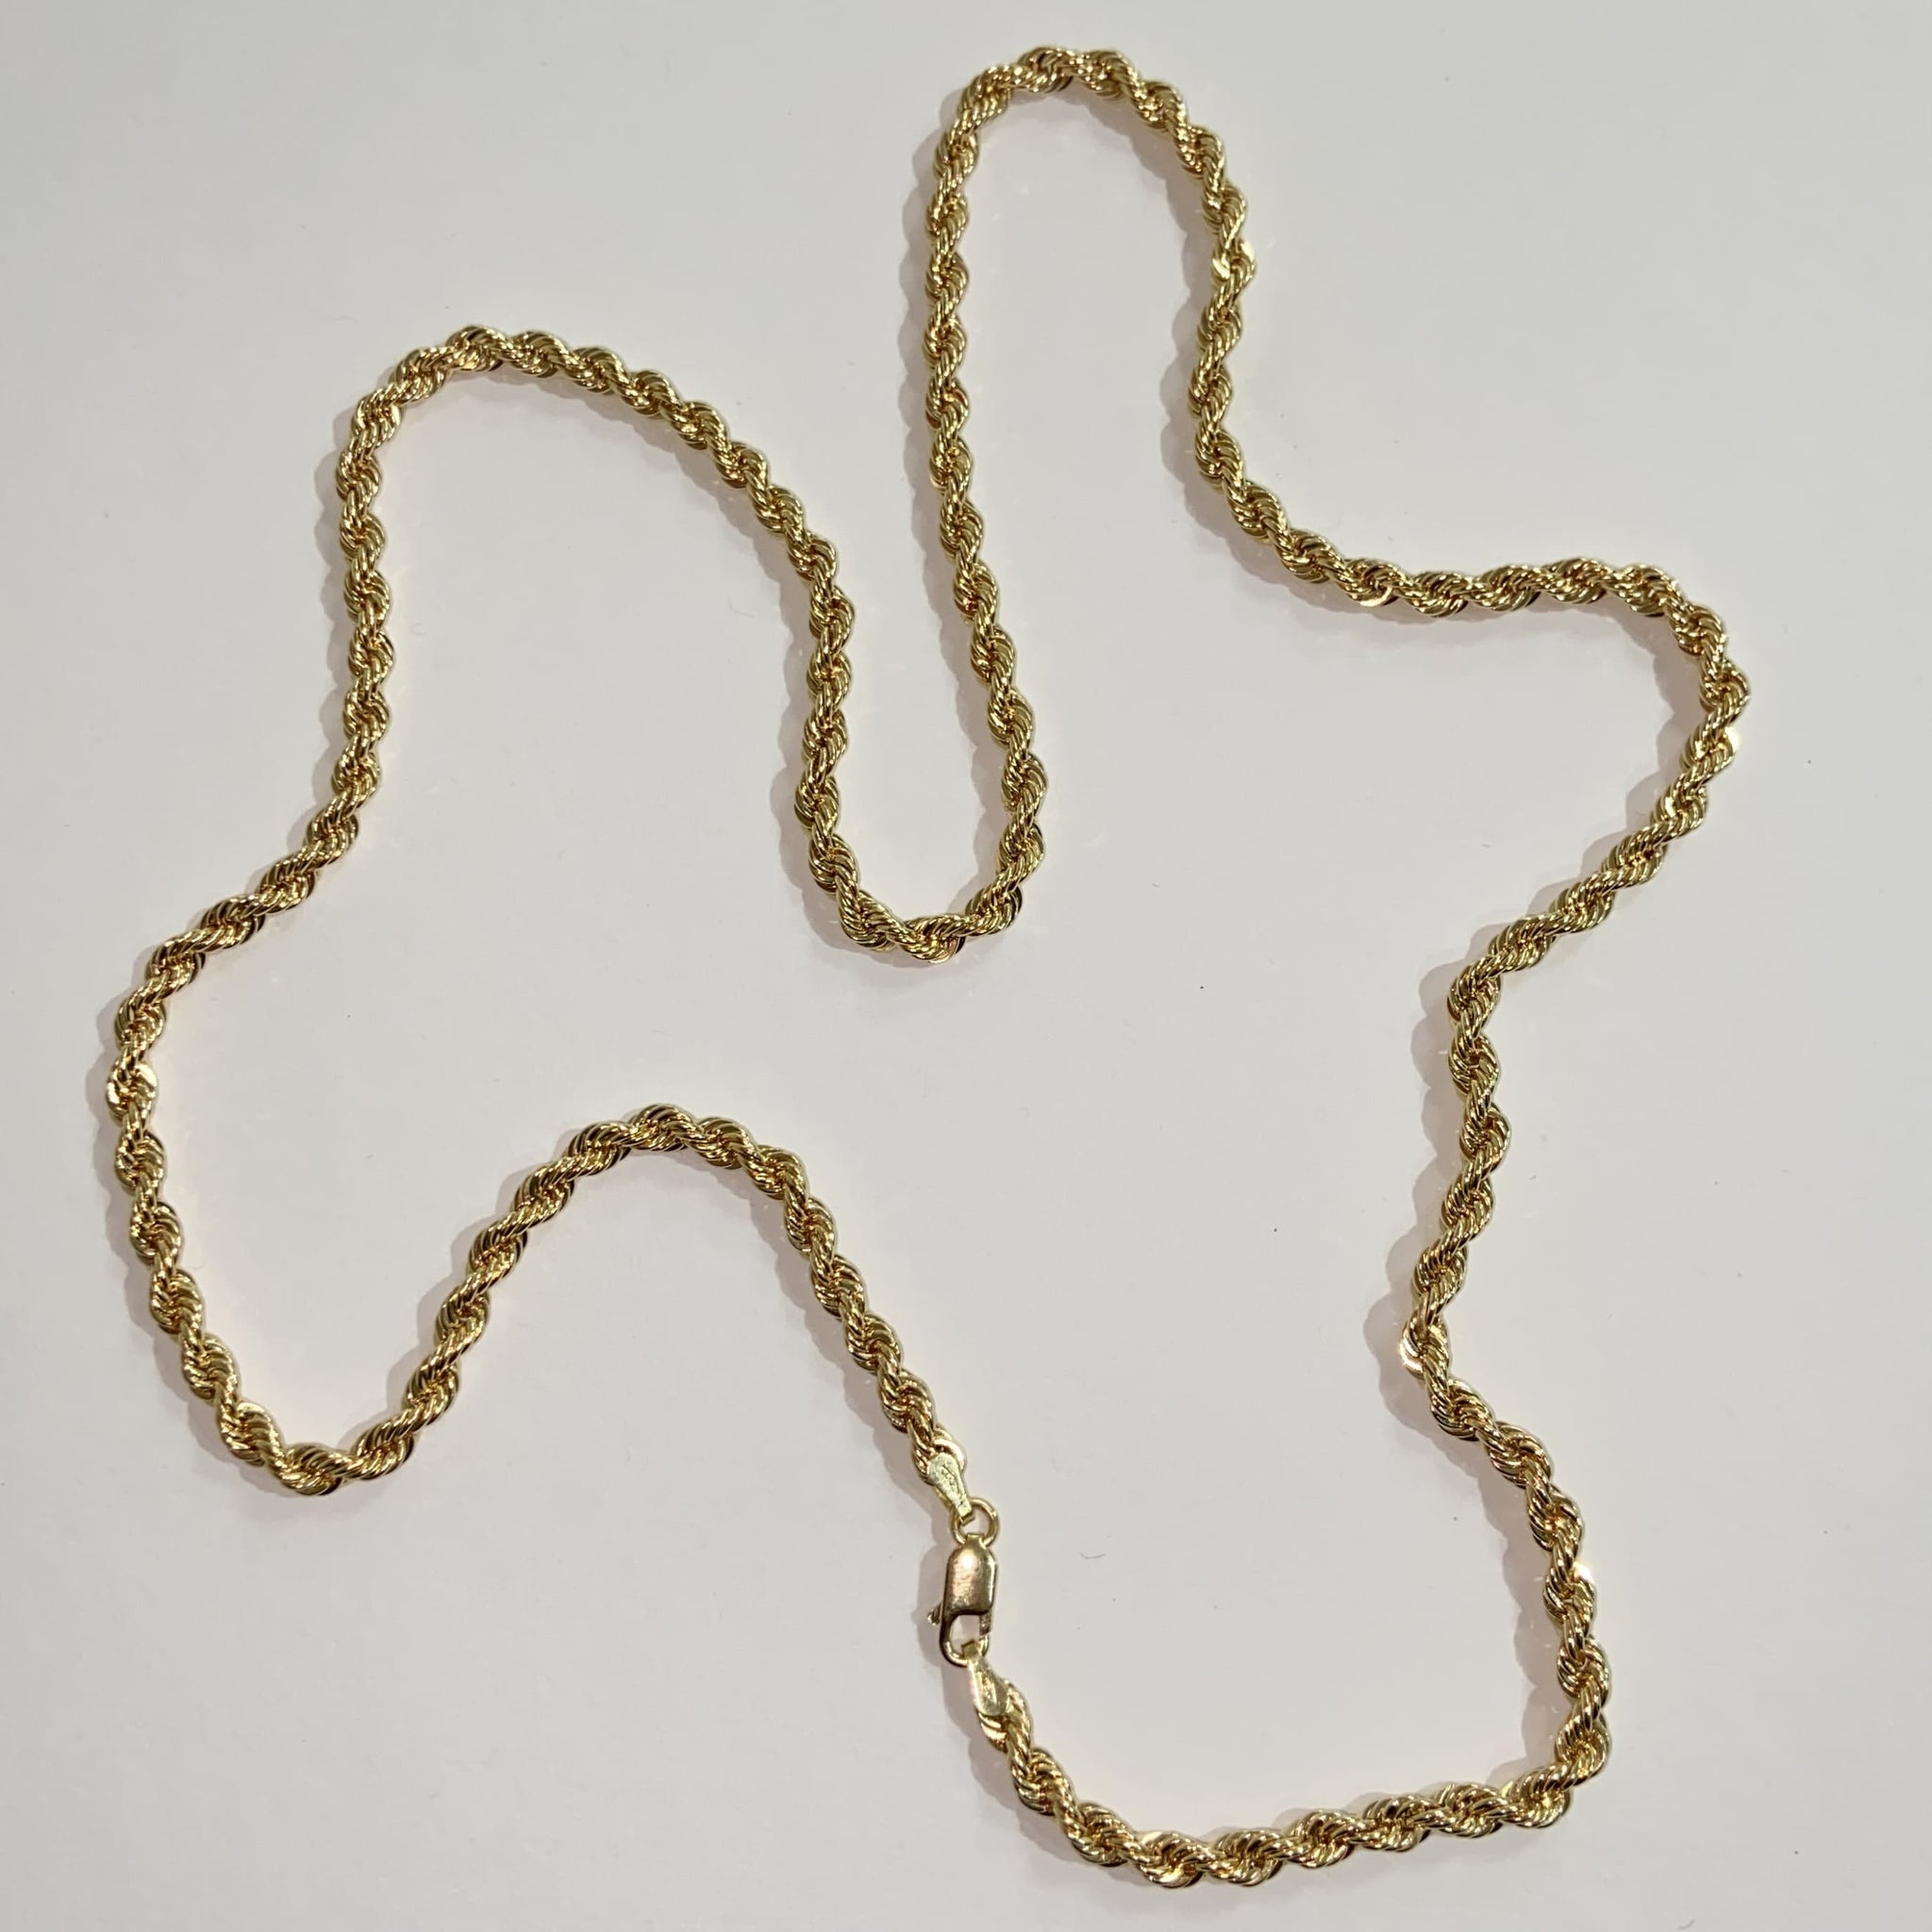 Rope chain / ketting 262 - 14 karaat 65 cm / 5,1 mm